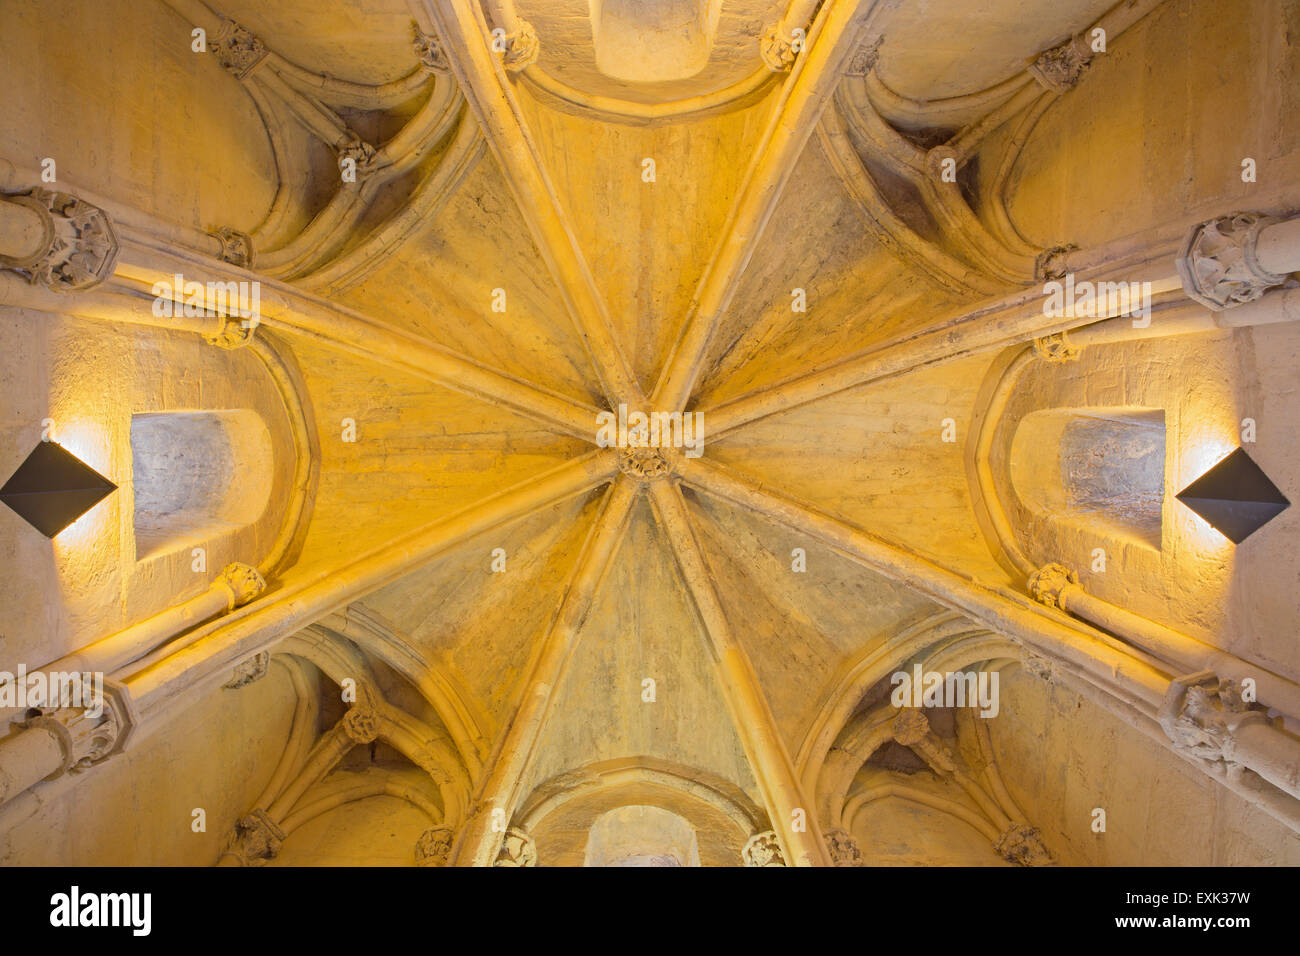 CORDOBA, SPAIN - MAY 25, 2015: The gothic vault in Alcazar de los Reyes Cristianos castle. Stock Photo